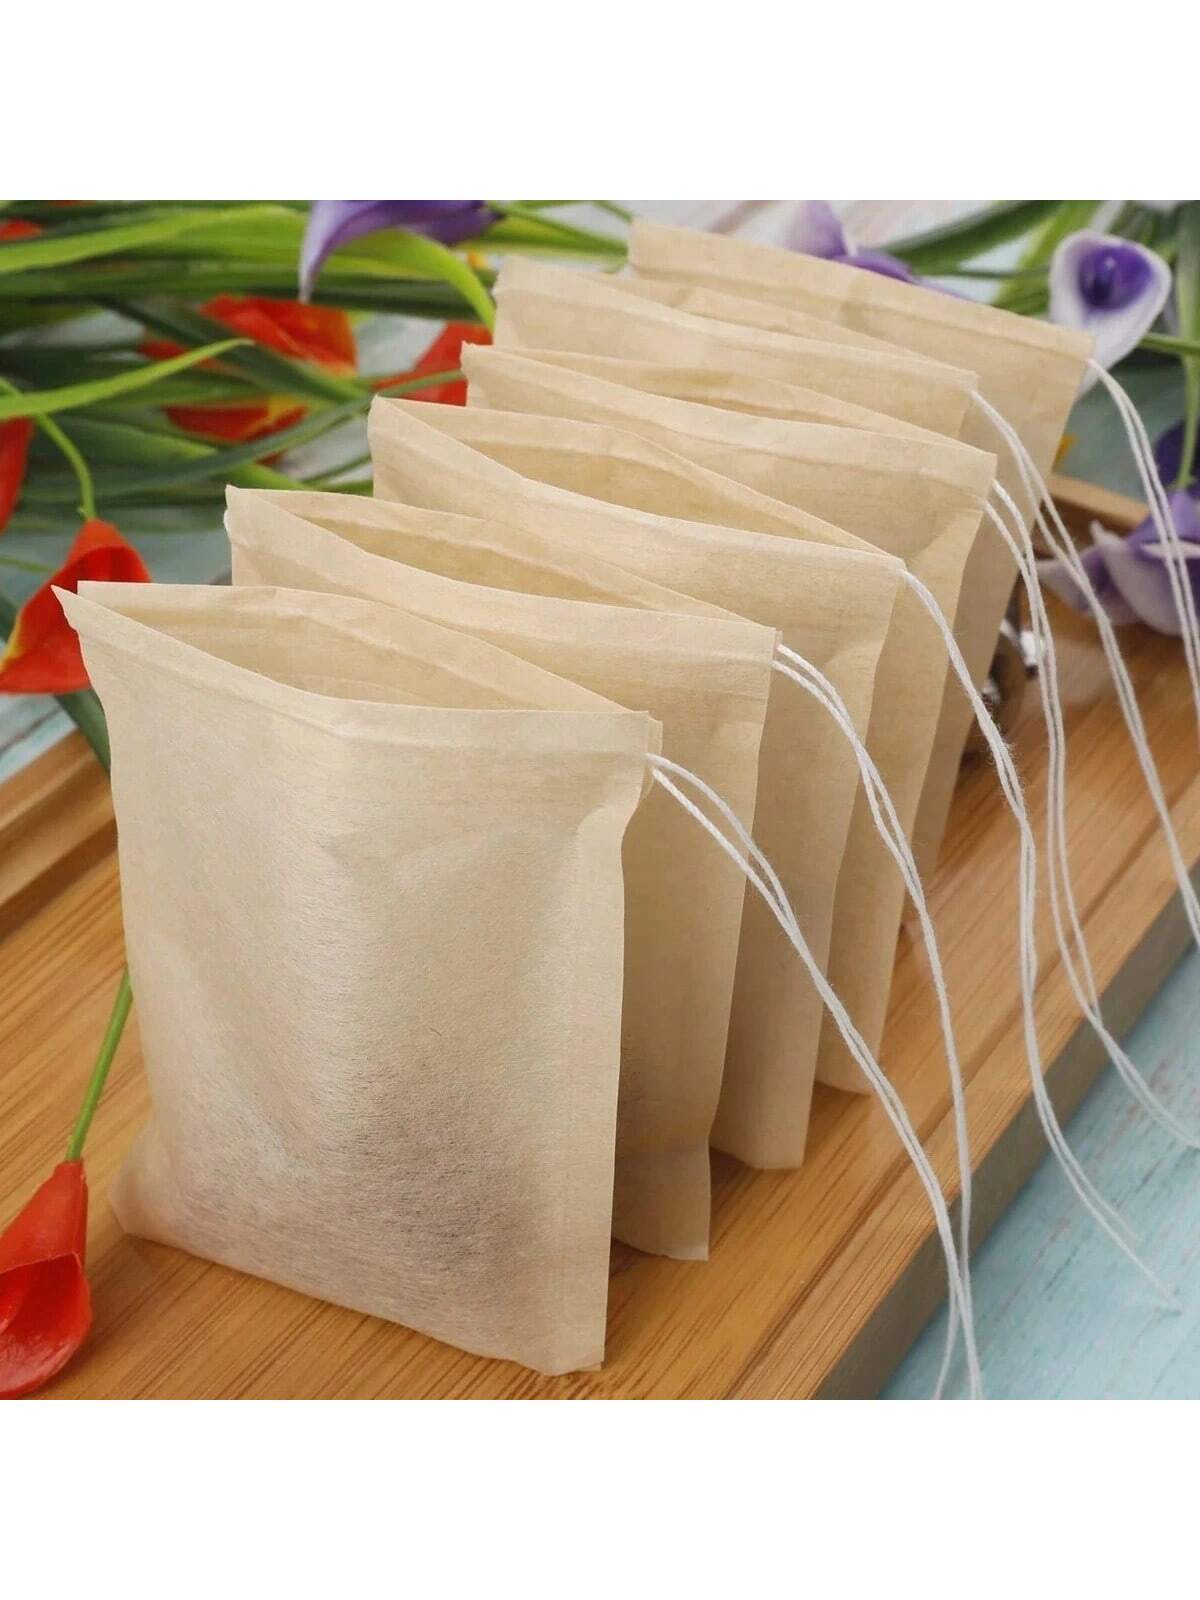 100Pcs Natural Wood Pulp Tea Filter Bags for Loose Leaf Tea